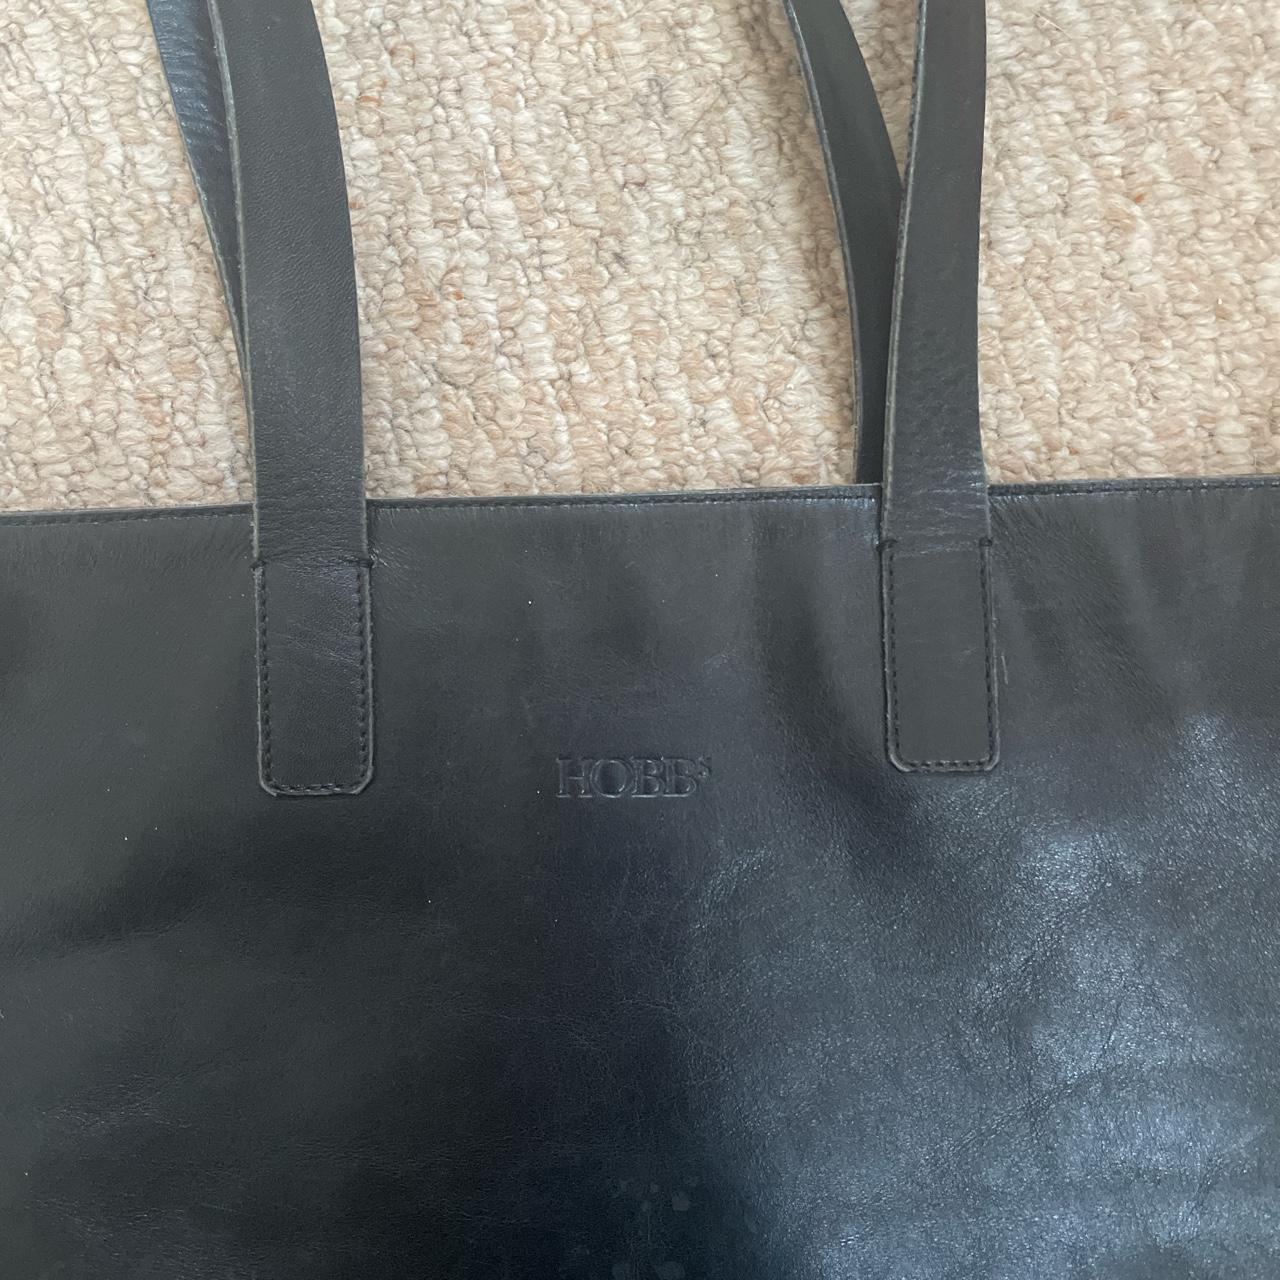 Vintage HOBBs black leather bag. Some small signs... - Depop